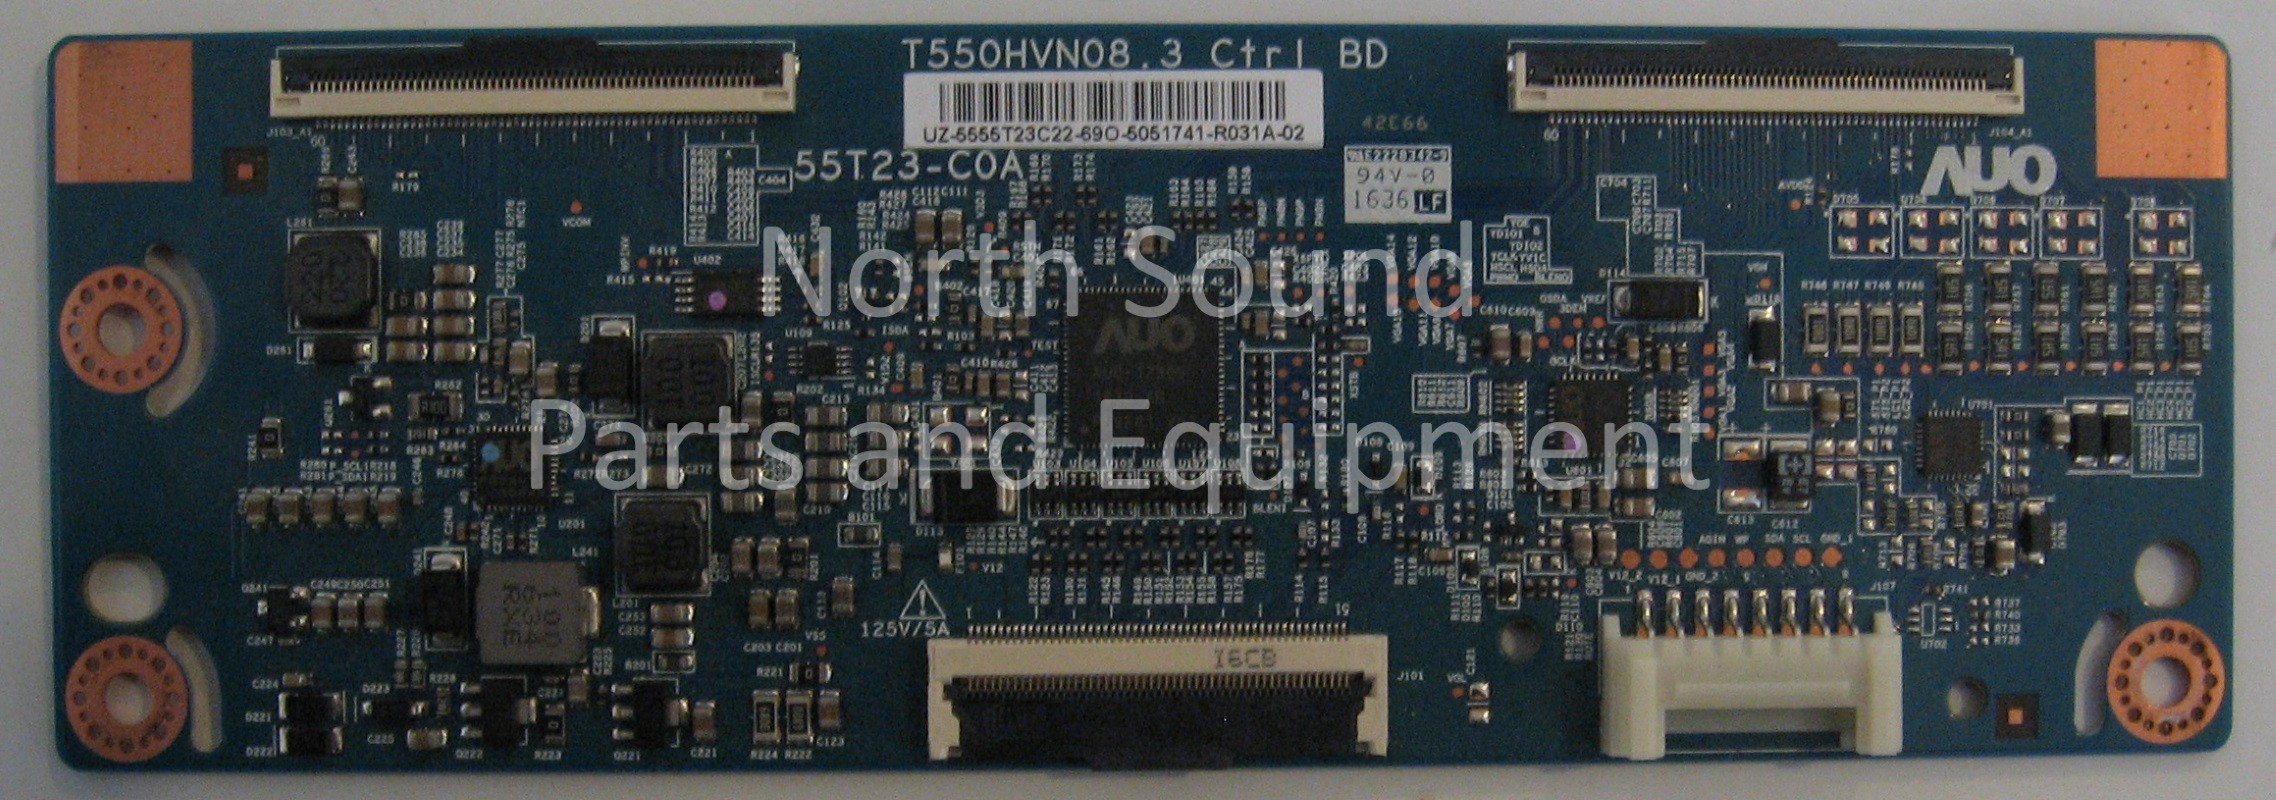 Samsung TCON Board, Front